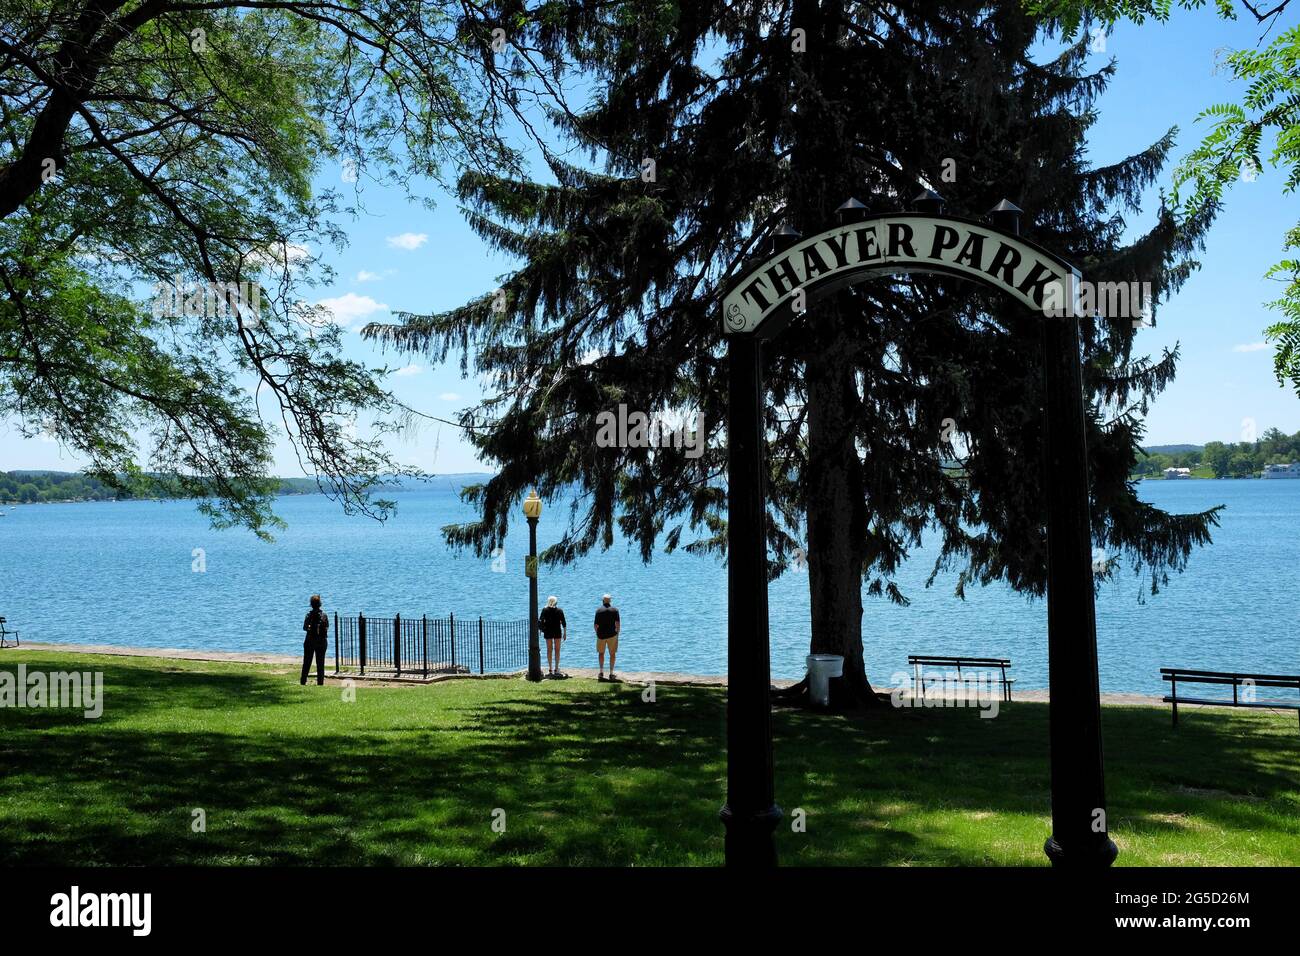 SKANEATELES, NEW YORK - 17. JUNI 2021: Thayer Park am Skaneateles Lake in Onondaga County, New York. Skaneateles ist vom Iroquois zum Long Lake. Stockfoto